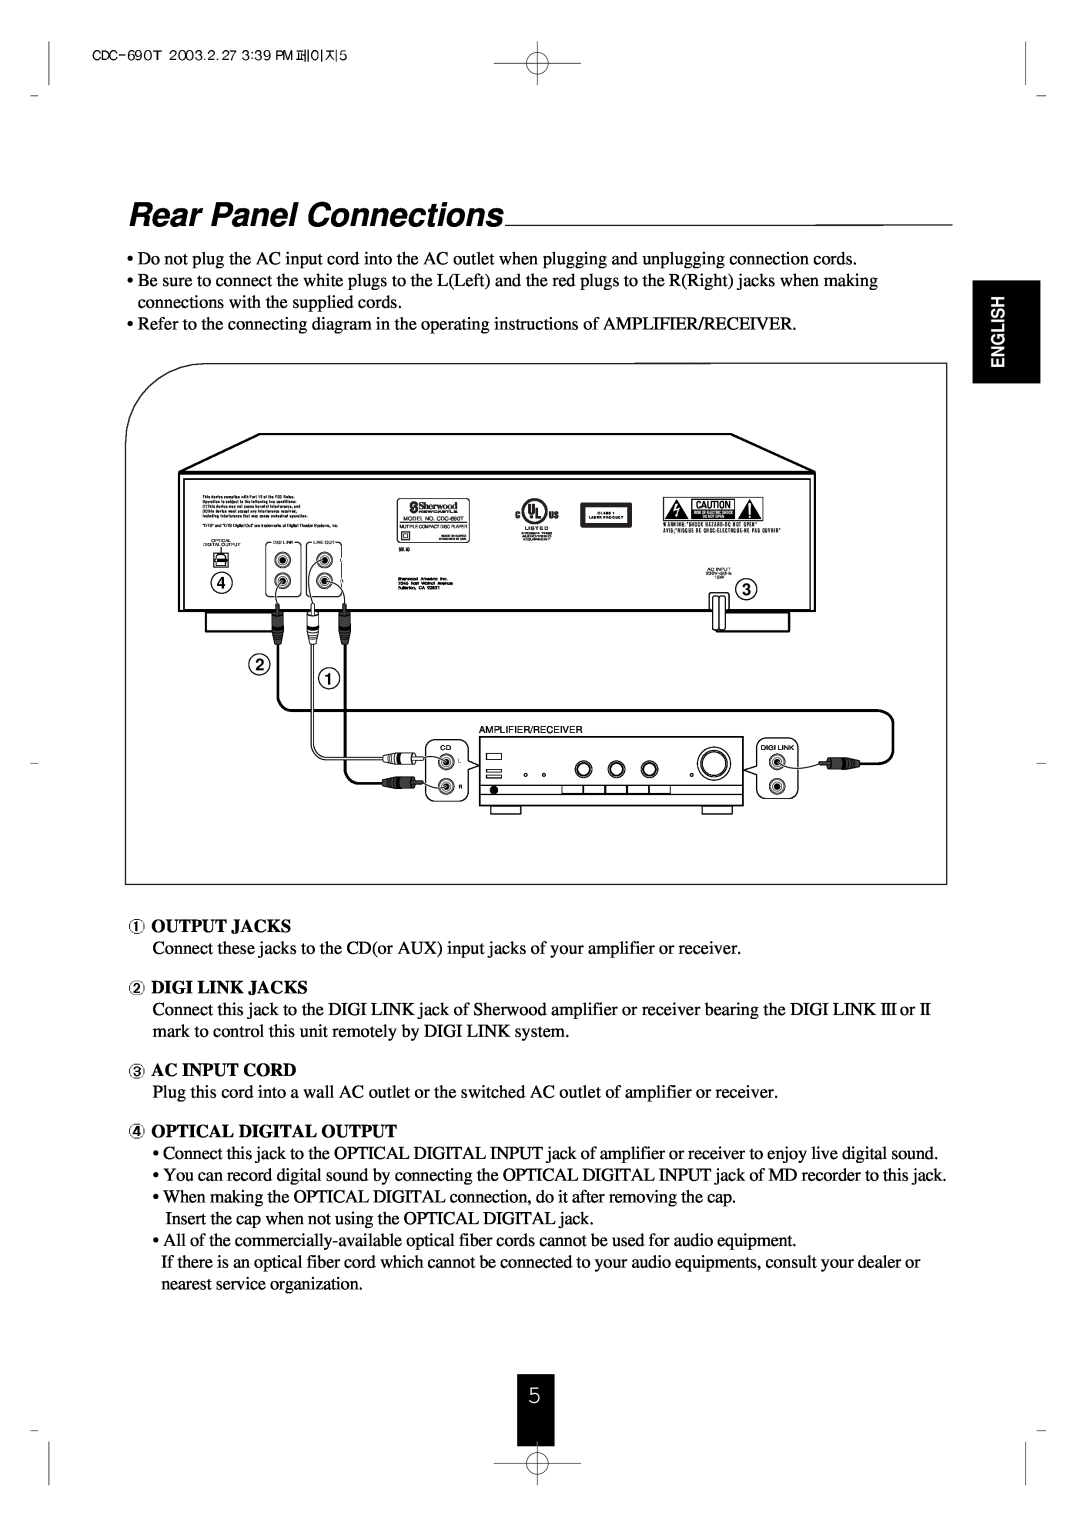 Sherwood CDC-690T Rear Panel Connections, Output Jacks, Digi Link Jacks, Ac Input Cord, Optical Digital Output 